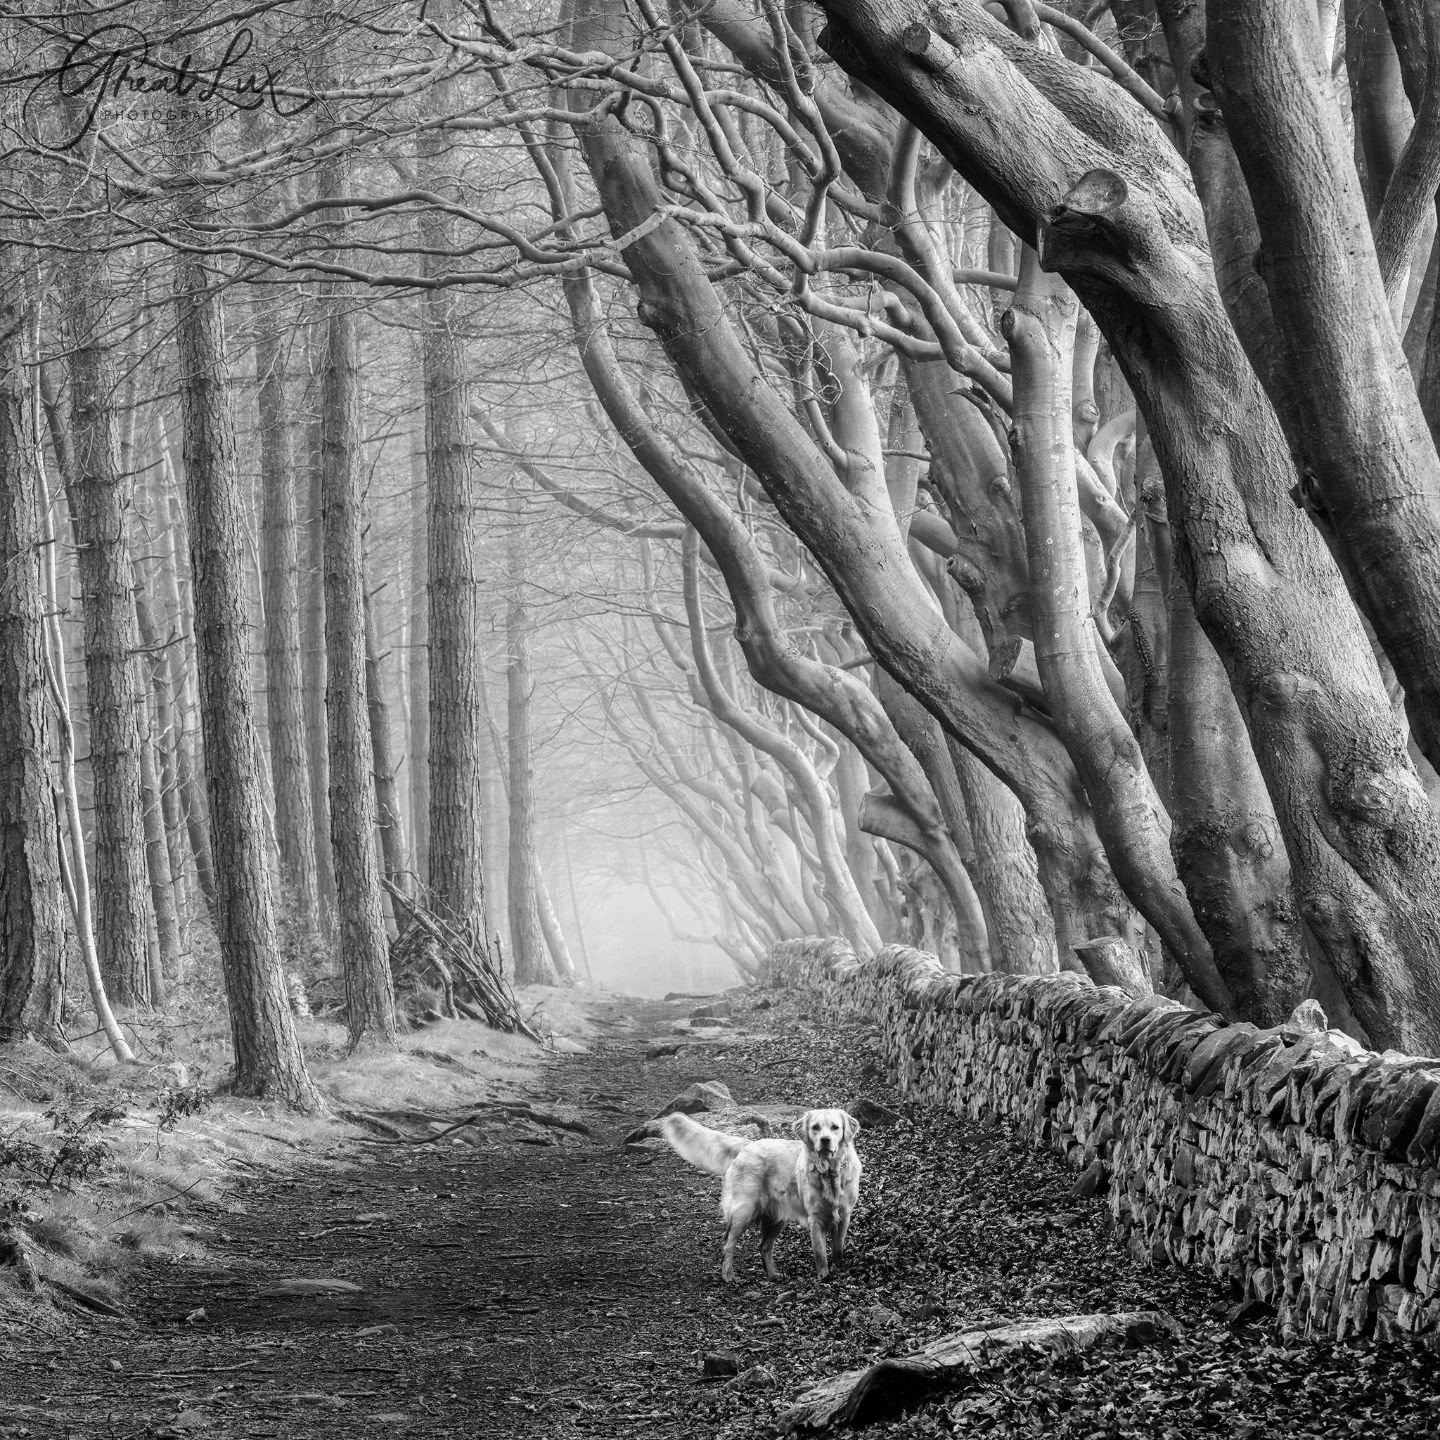 Princess Penny and the King's Passage

#pennyofthepeak #goldenretriever #derbyshire #woodlandphotography #sonyalpha #bnw #bnw_captures #bnwzone #bnwmood #bnw #treesofinstagram #treestagram #tree_brilliance #tree_magic #treescapes #ig_shotz_trees #tre